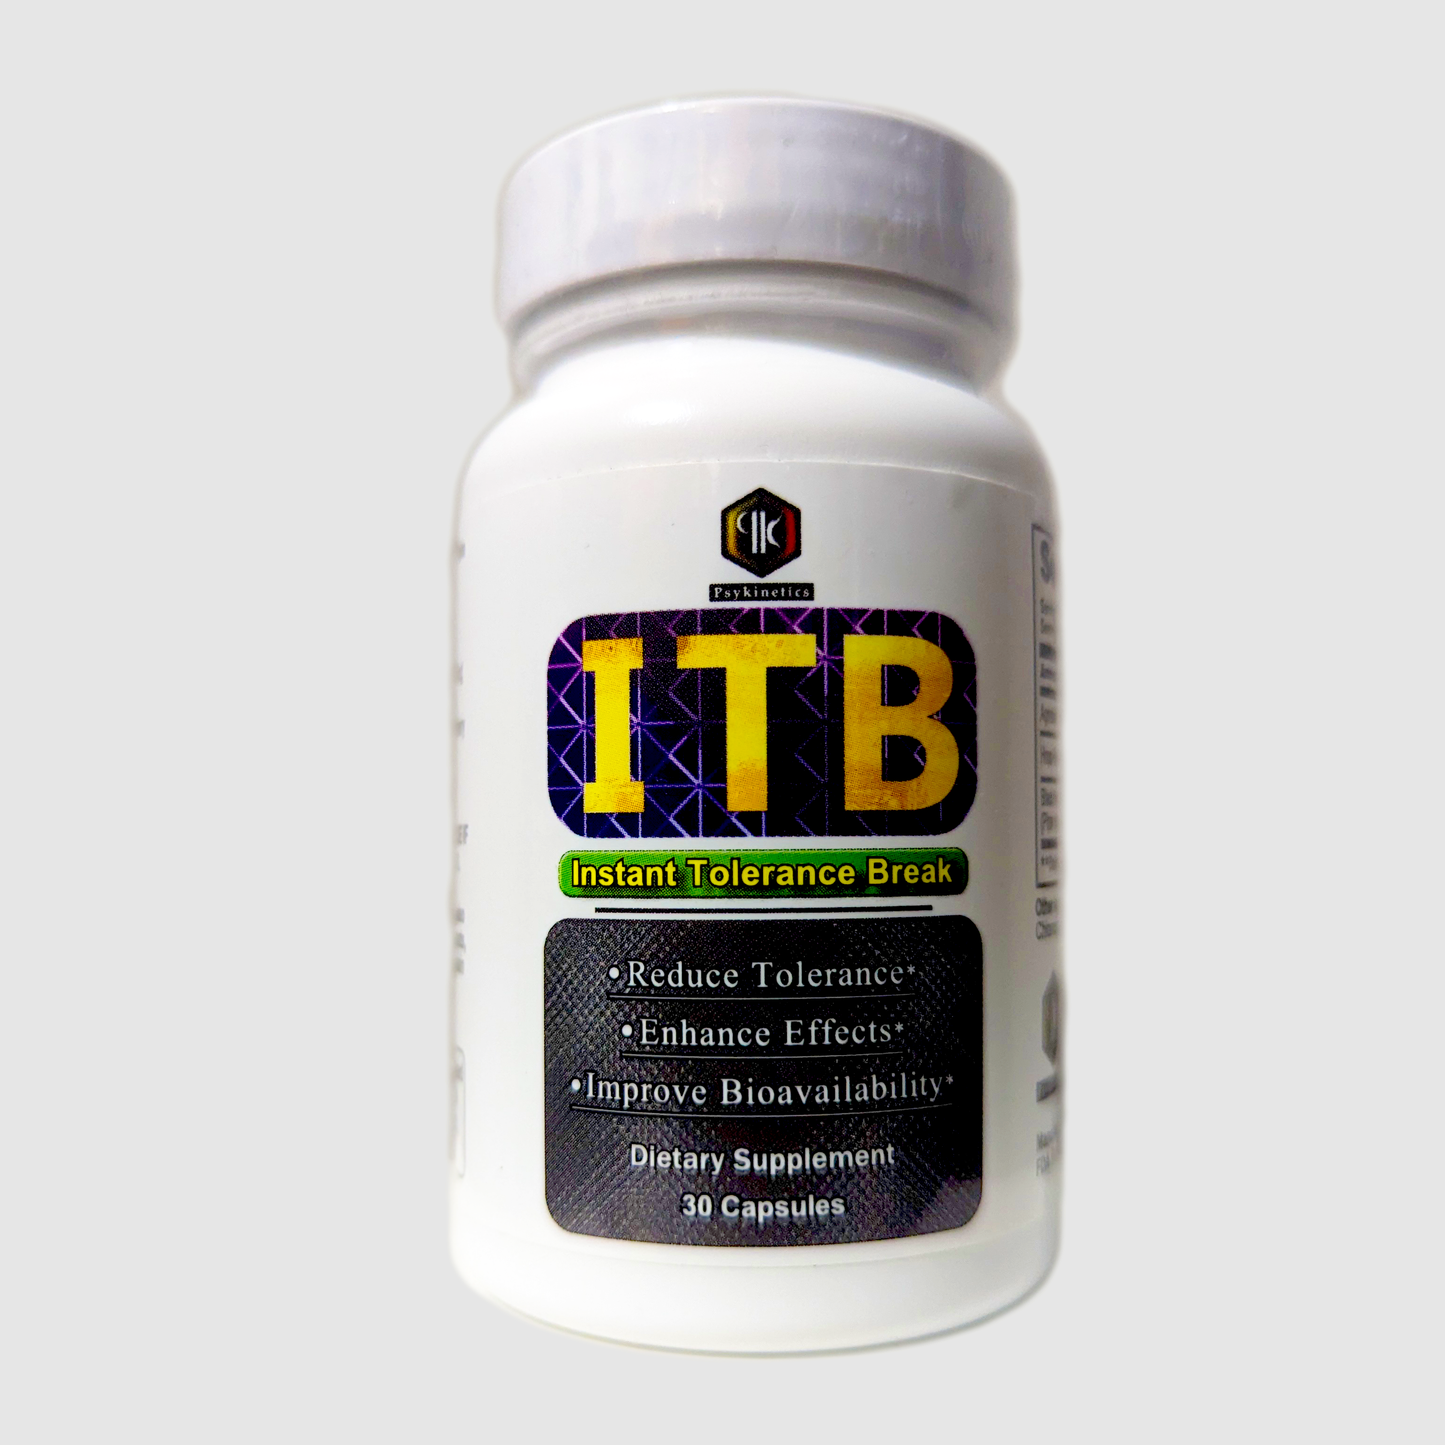 Psykinetics LLC ITB Instant Tolerance Break Reduce Tolerance Enhance Effects Improve Bioavailability Dietary Supplement 30 Capsules